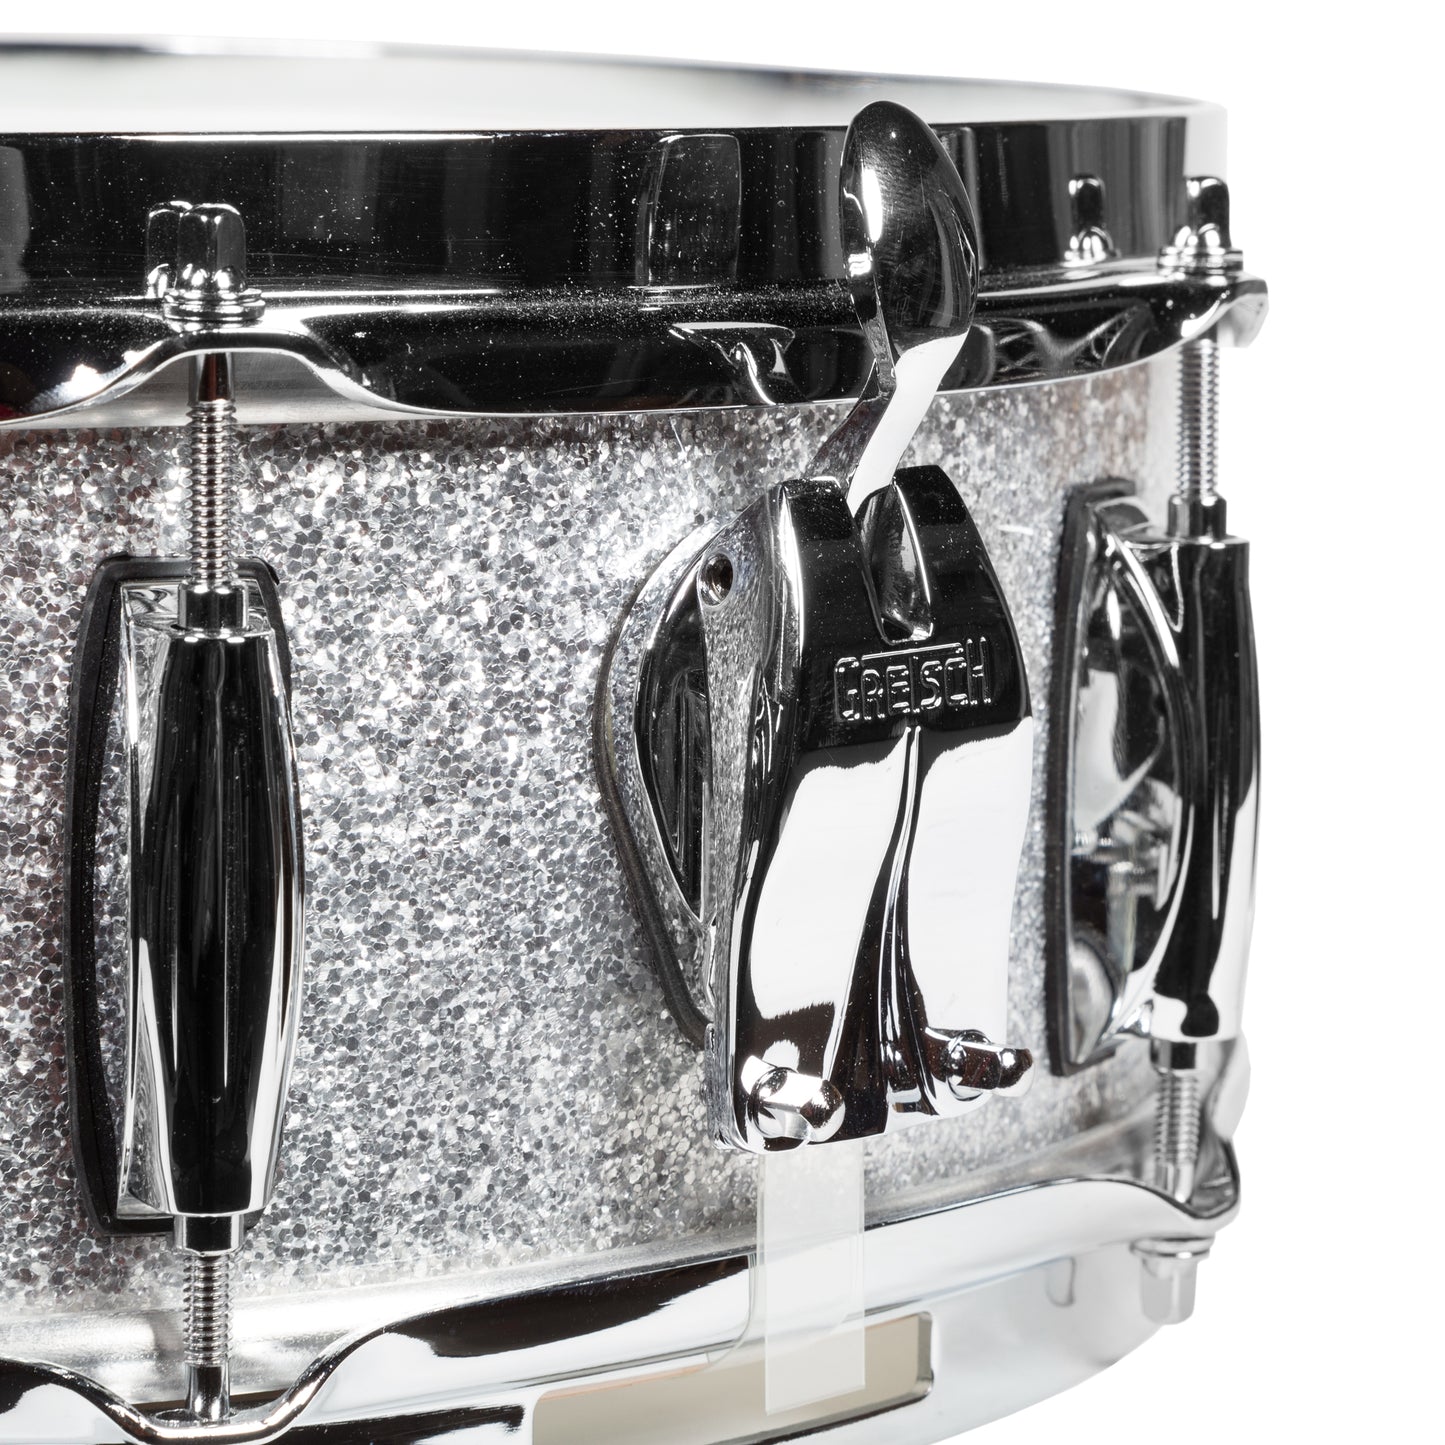 Gretsch Brooklyn Series 5x14 Snare Drum in Silver Sparkle